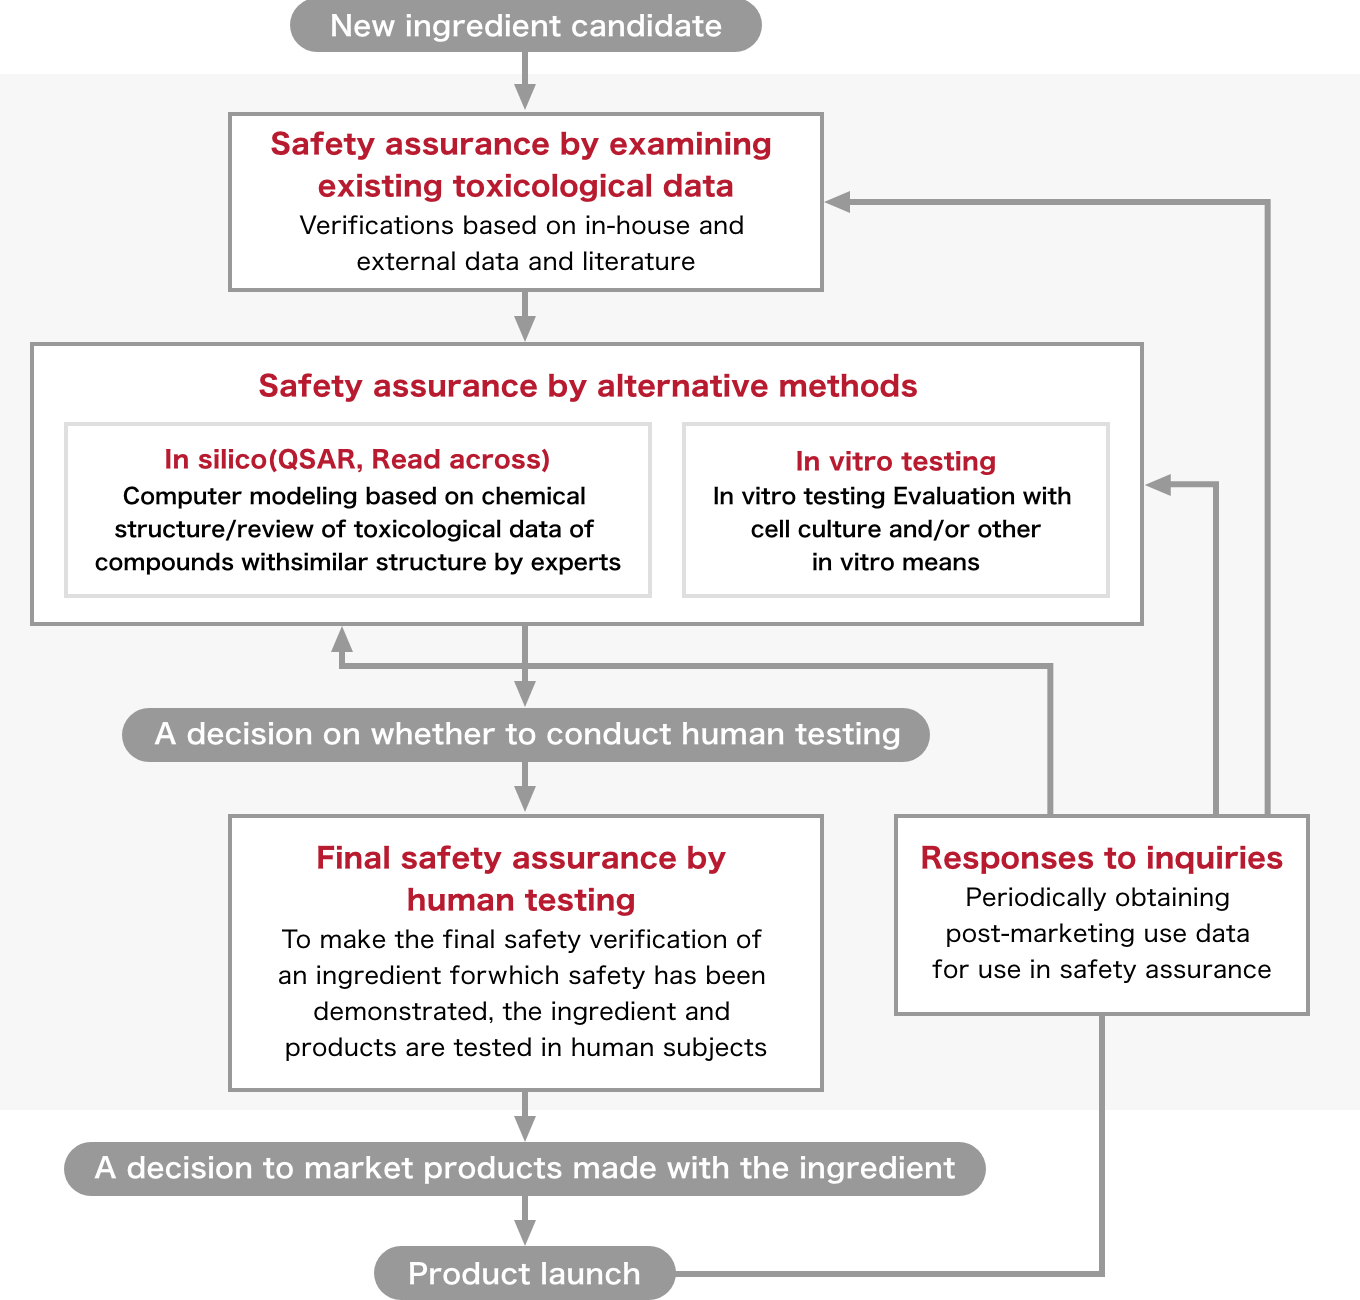 Elements of Shiseido Safety Assurance System